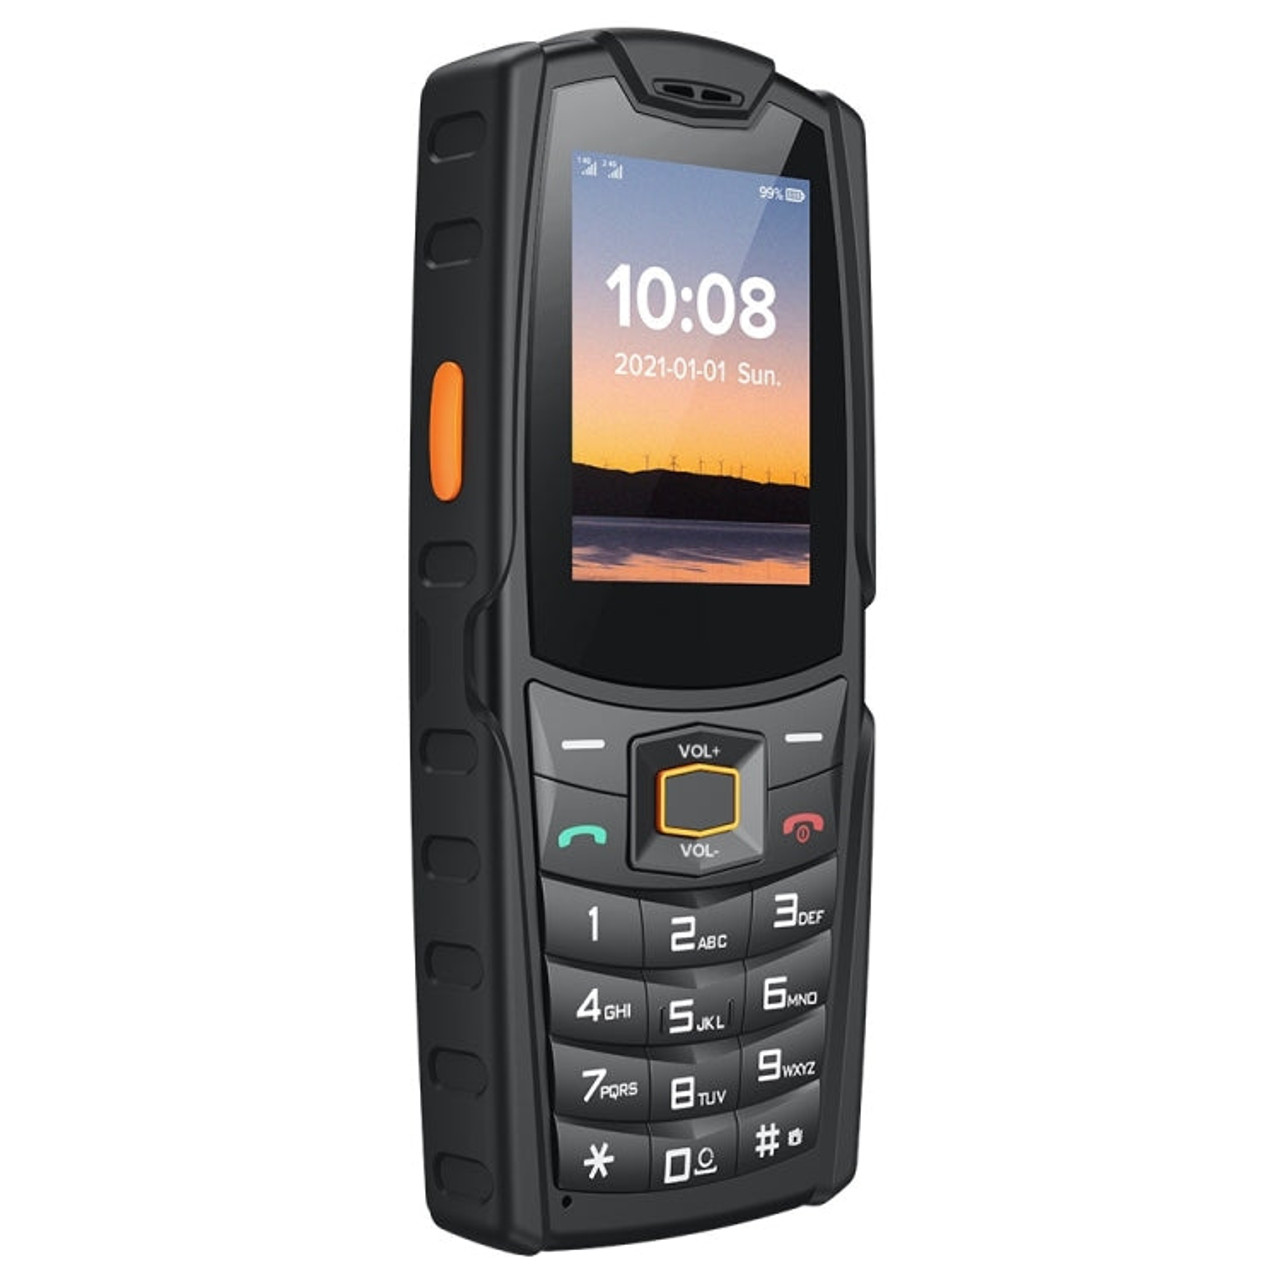 AGM M6 4G Rugged Phone, RU Version